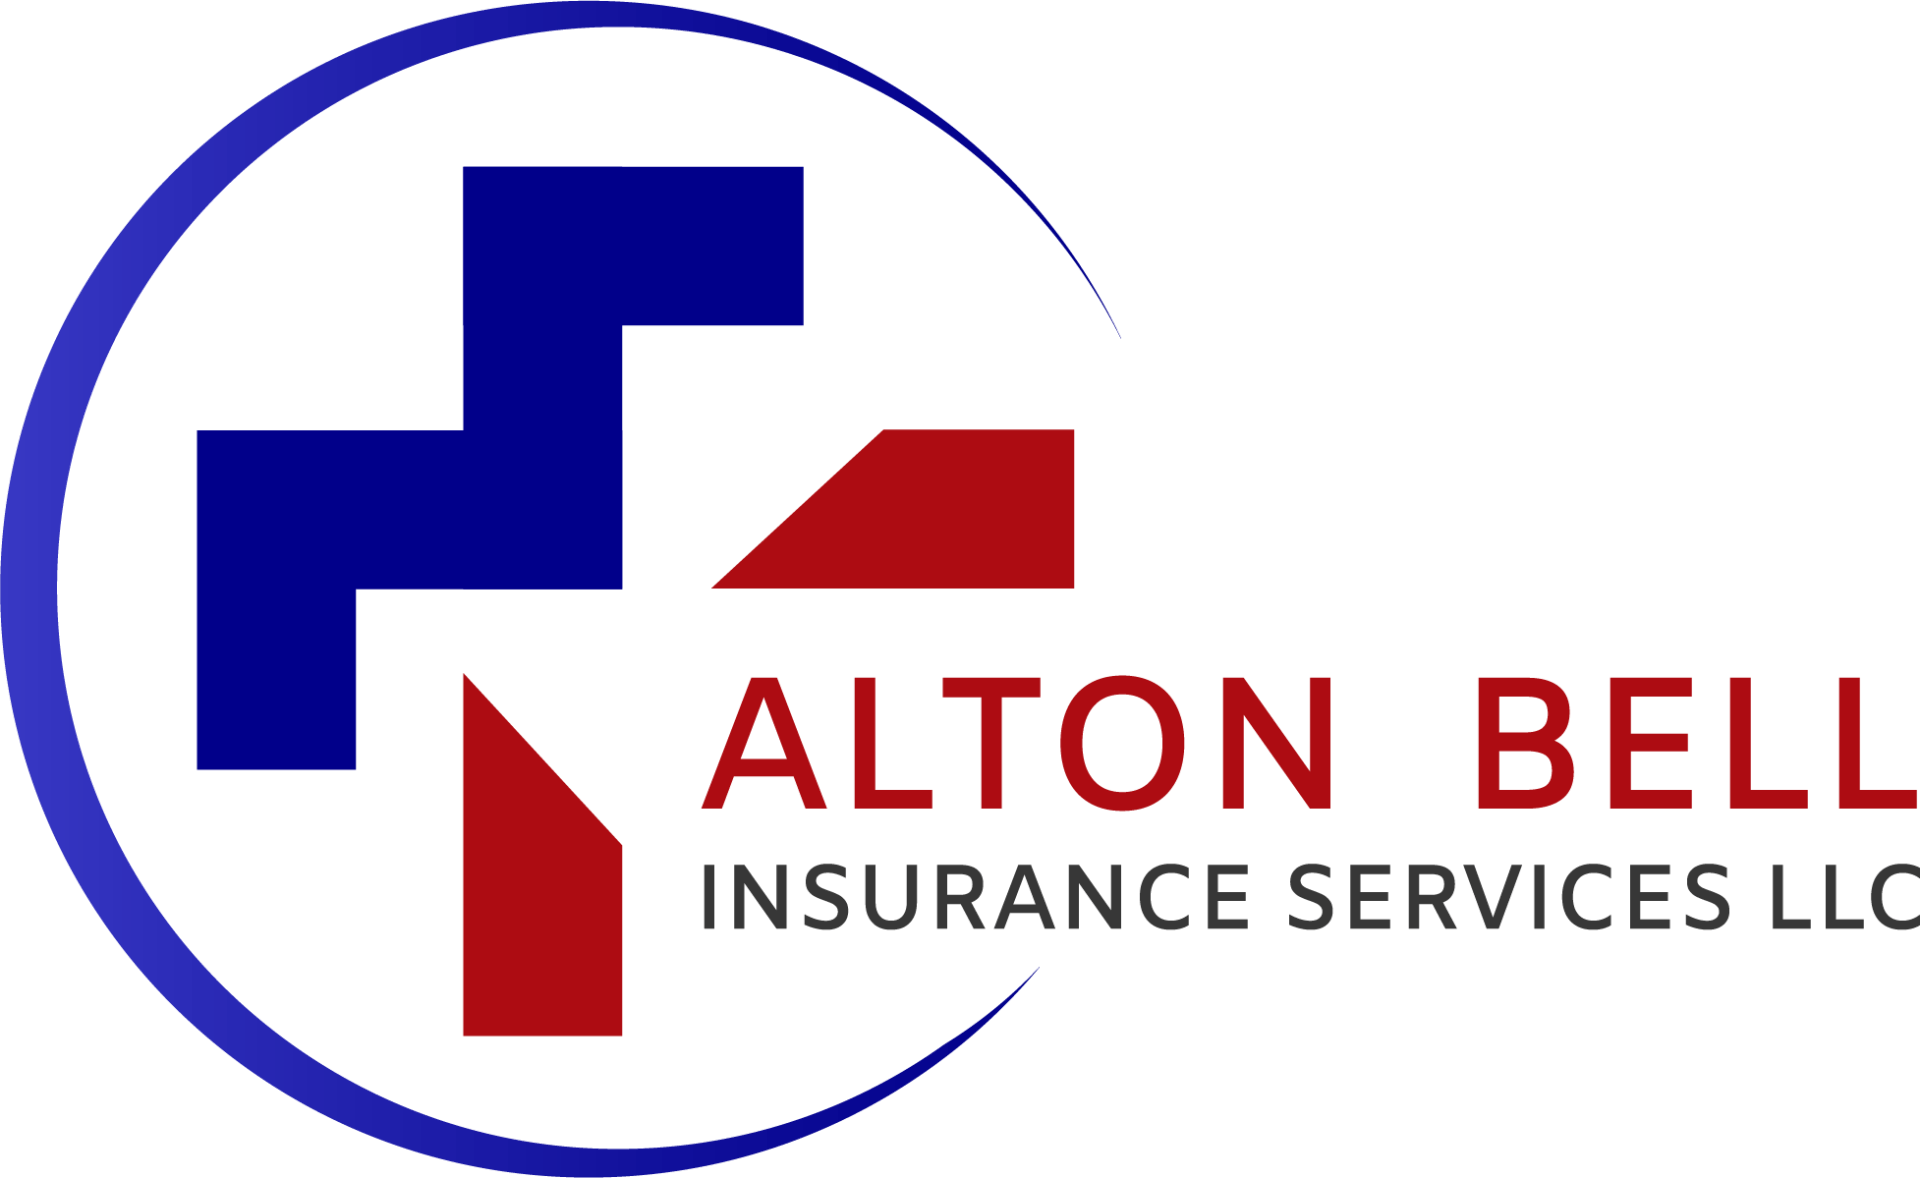 Alton Bell Insurance Services, LLC